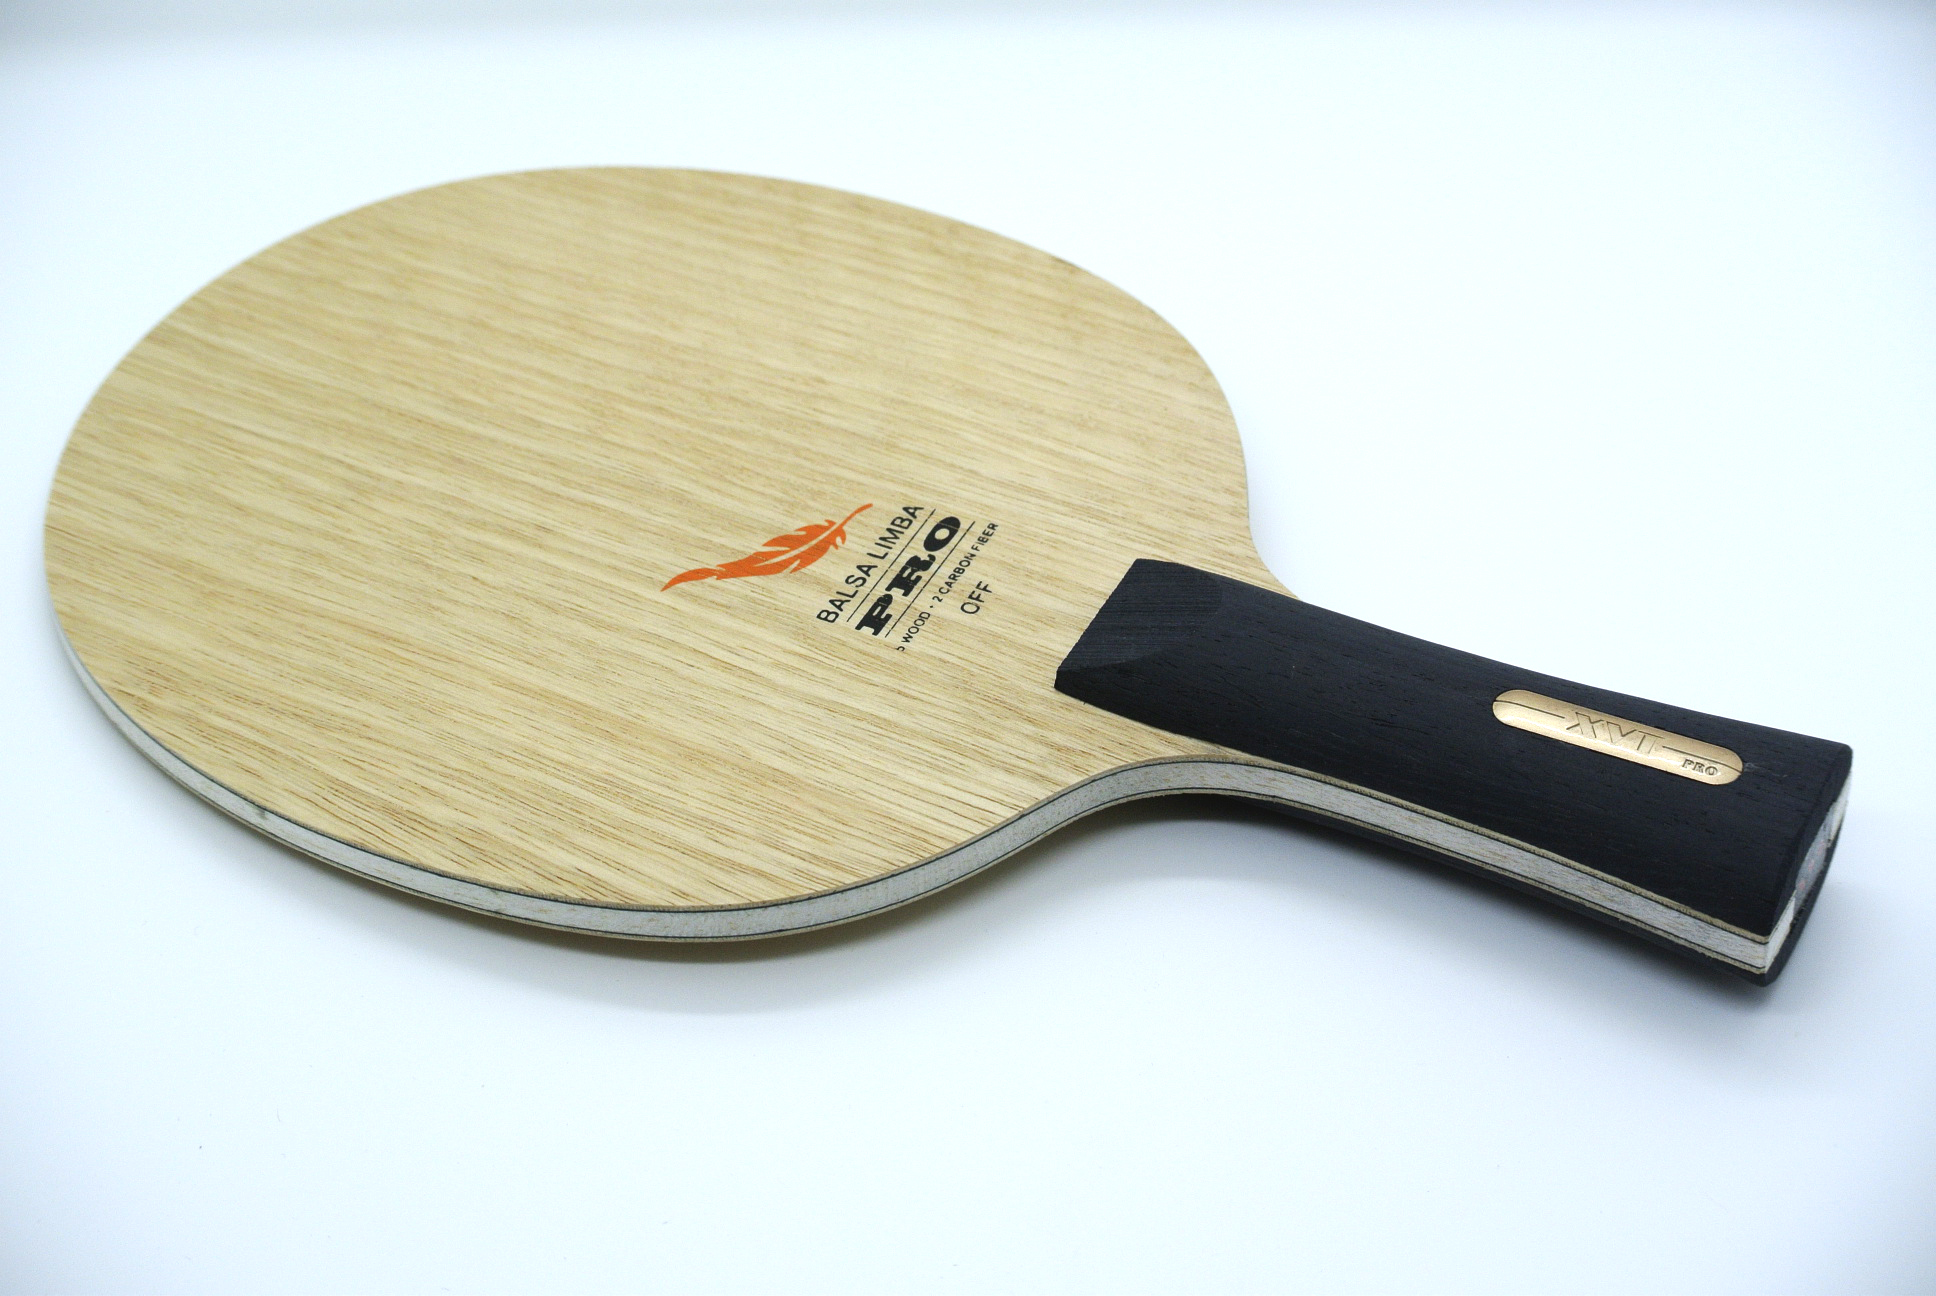 XVT Balsa Limba Pro carbon table tennis blade